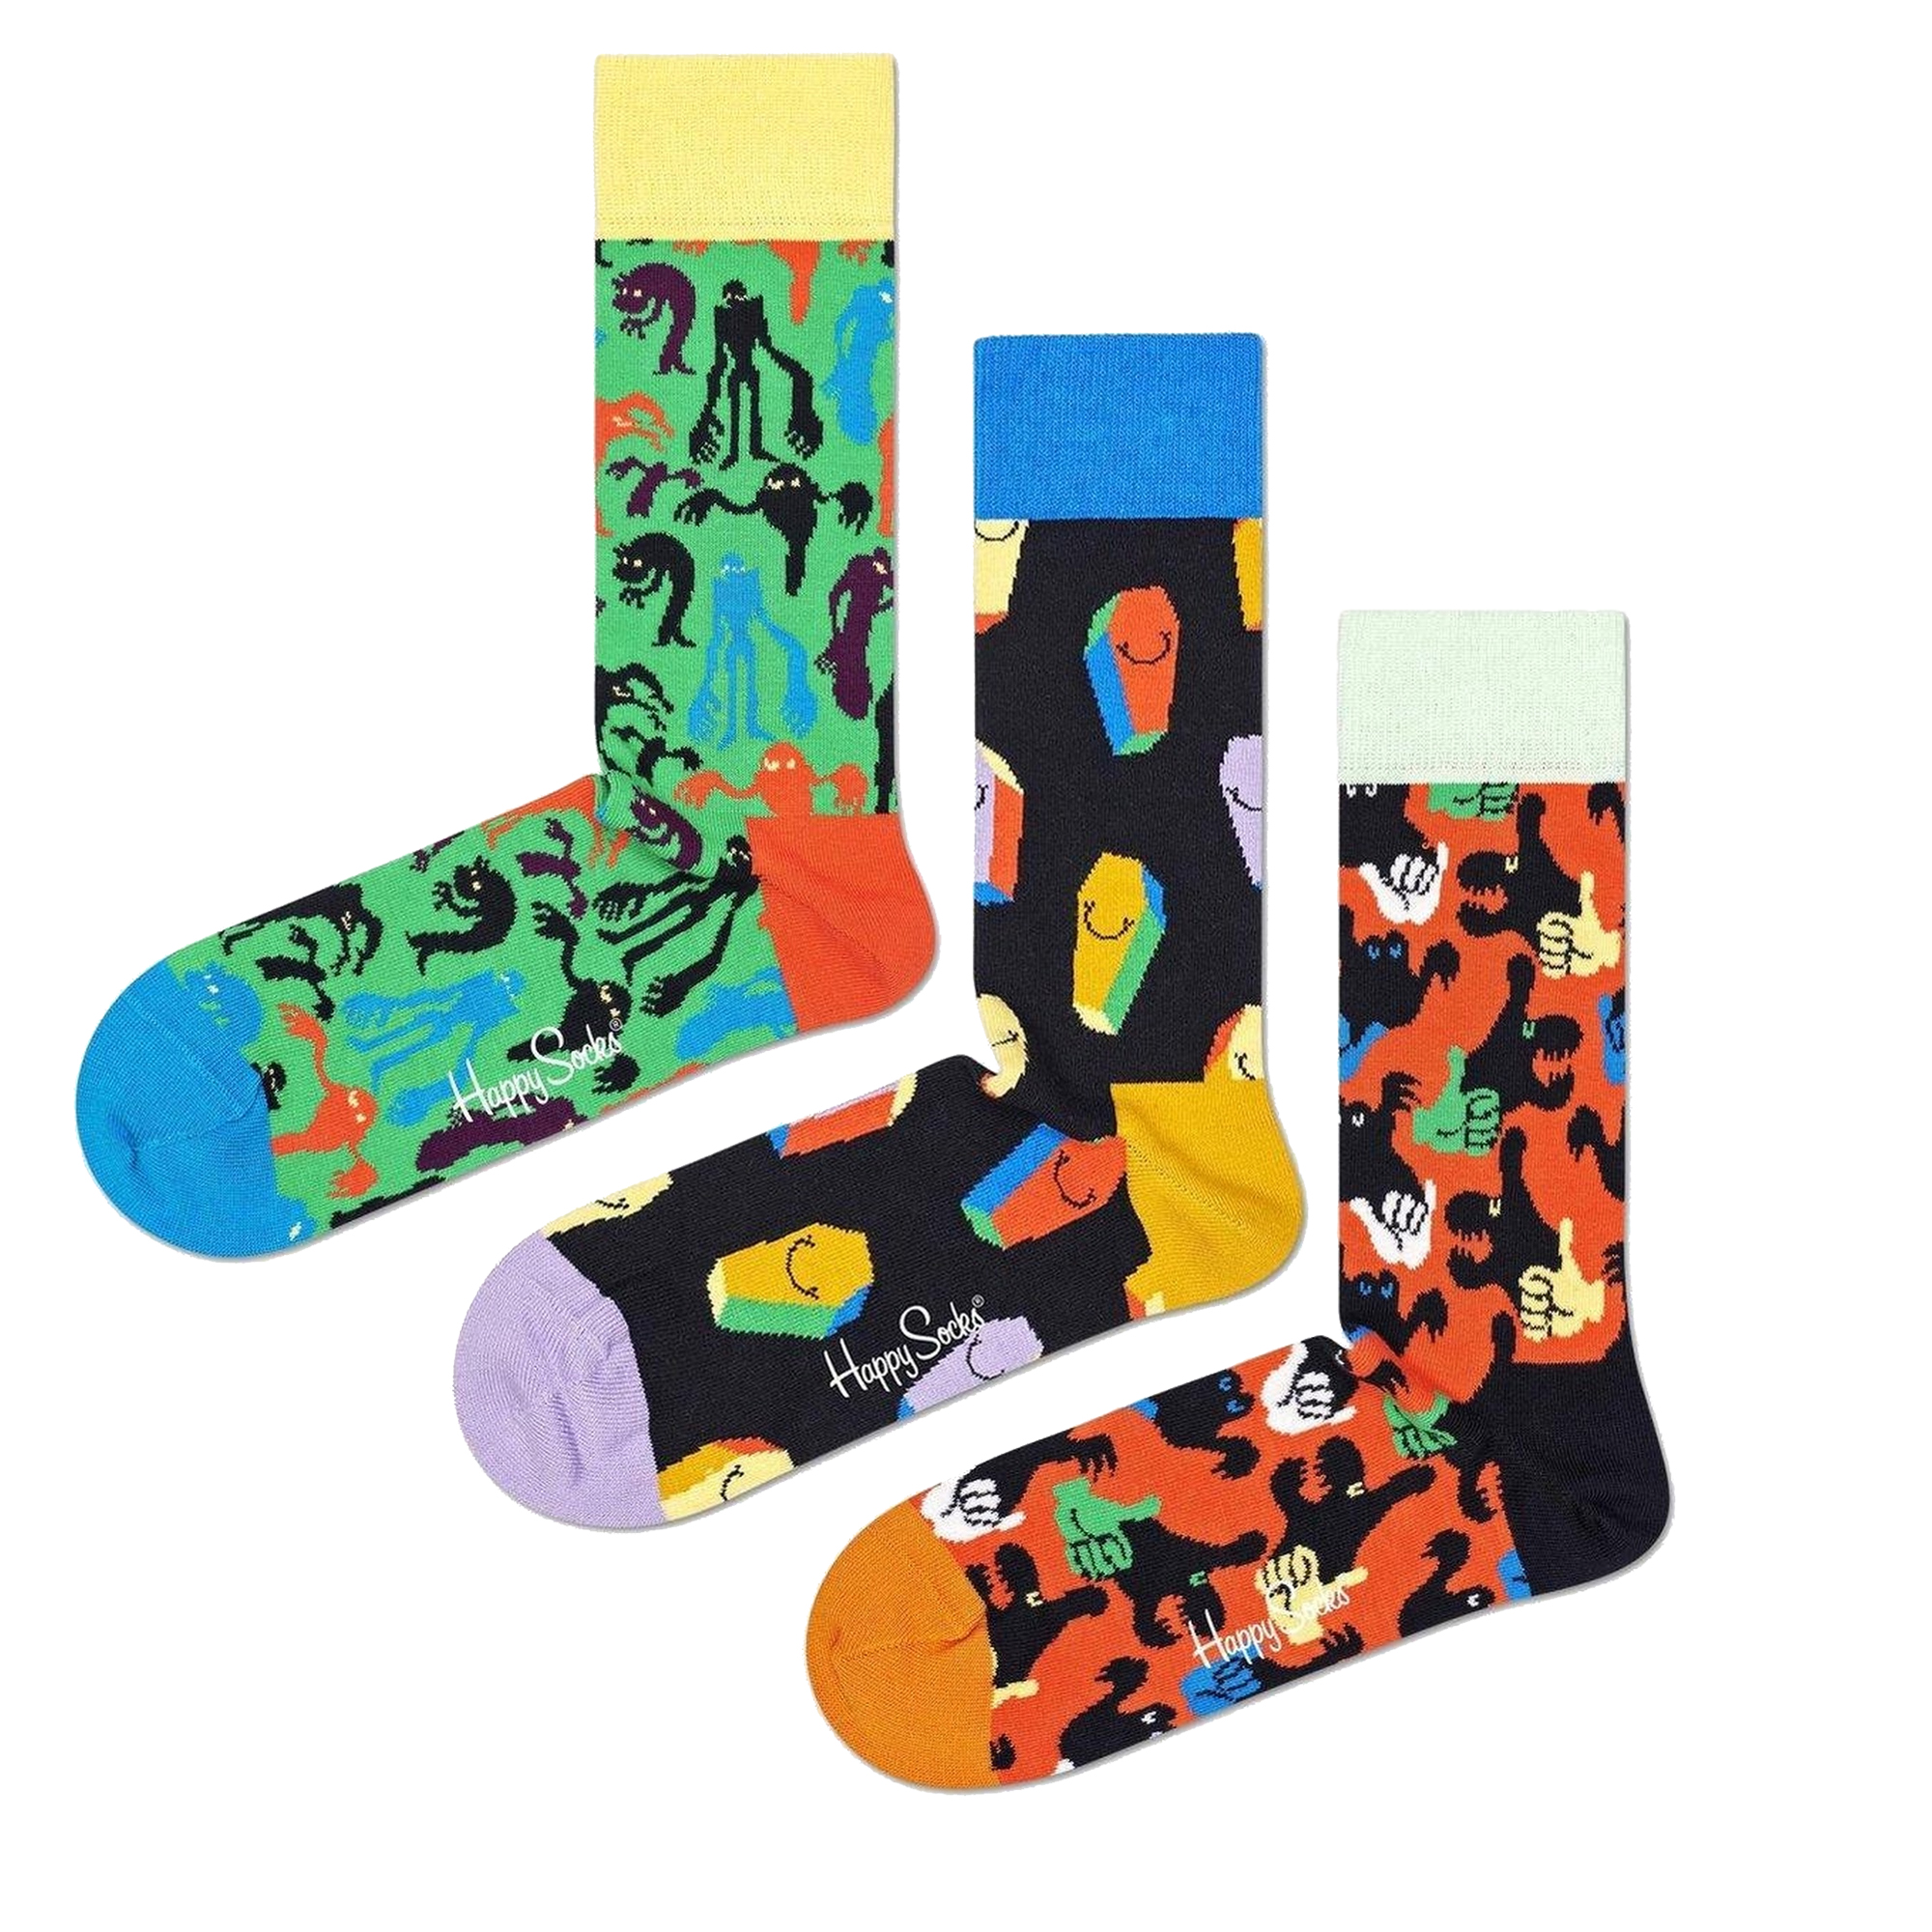 Pack 3 Pares De Calcetines Happy Socks Halloween Gift Set - Multicolor  MKP